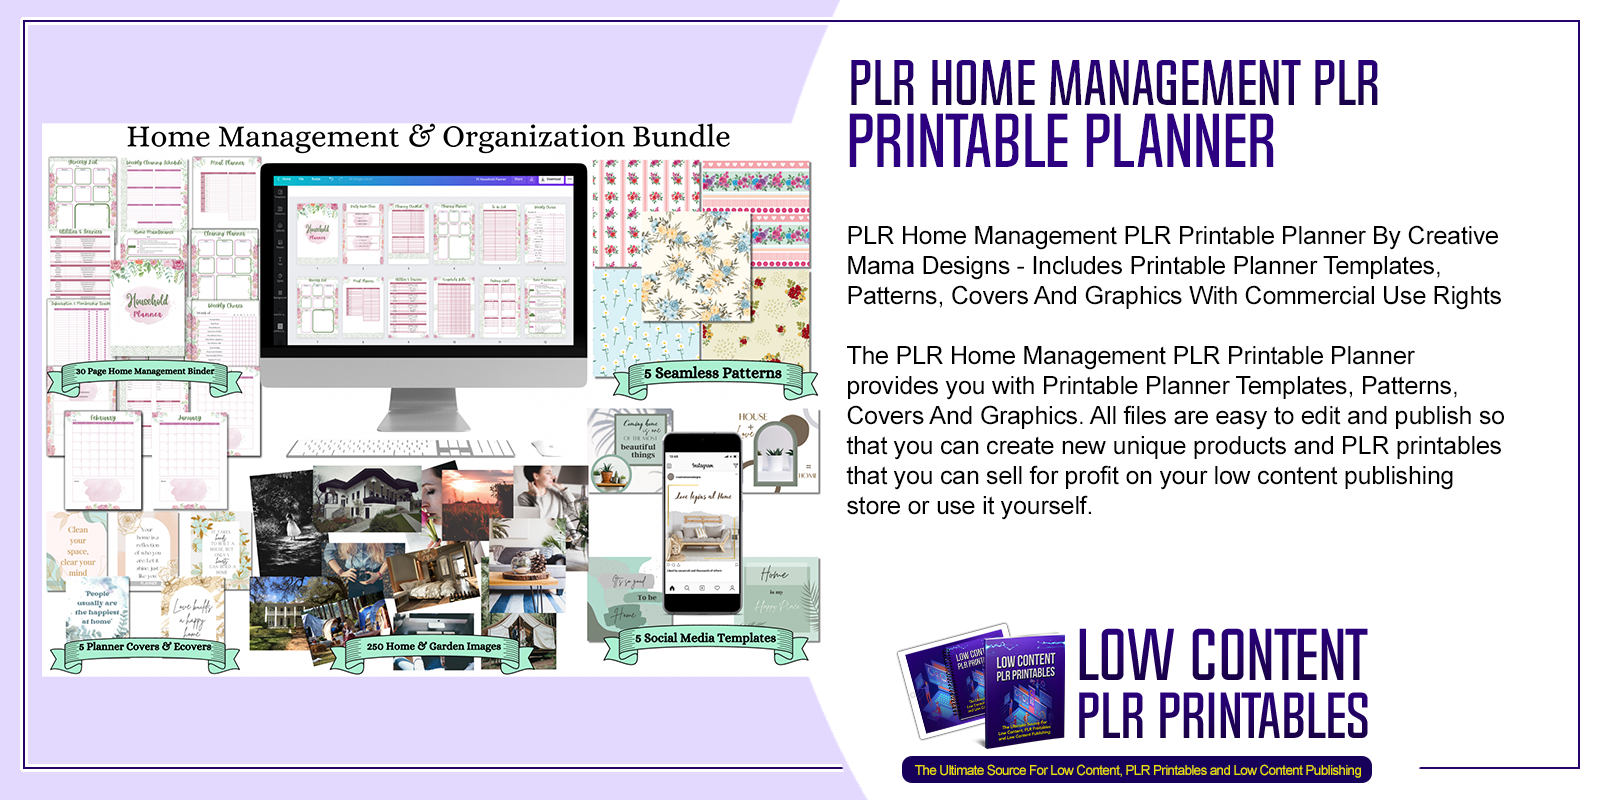 PLR Home Management PLR Printable Planner